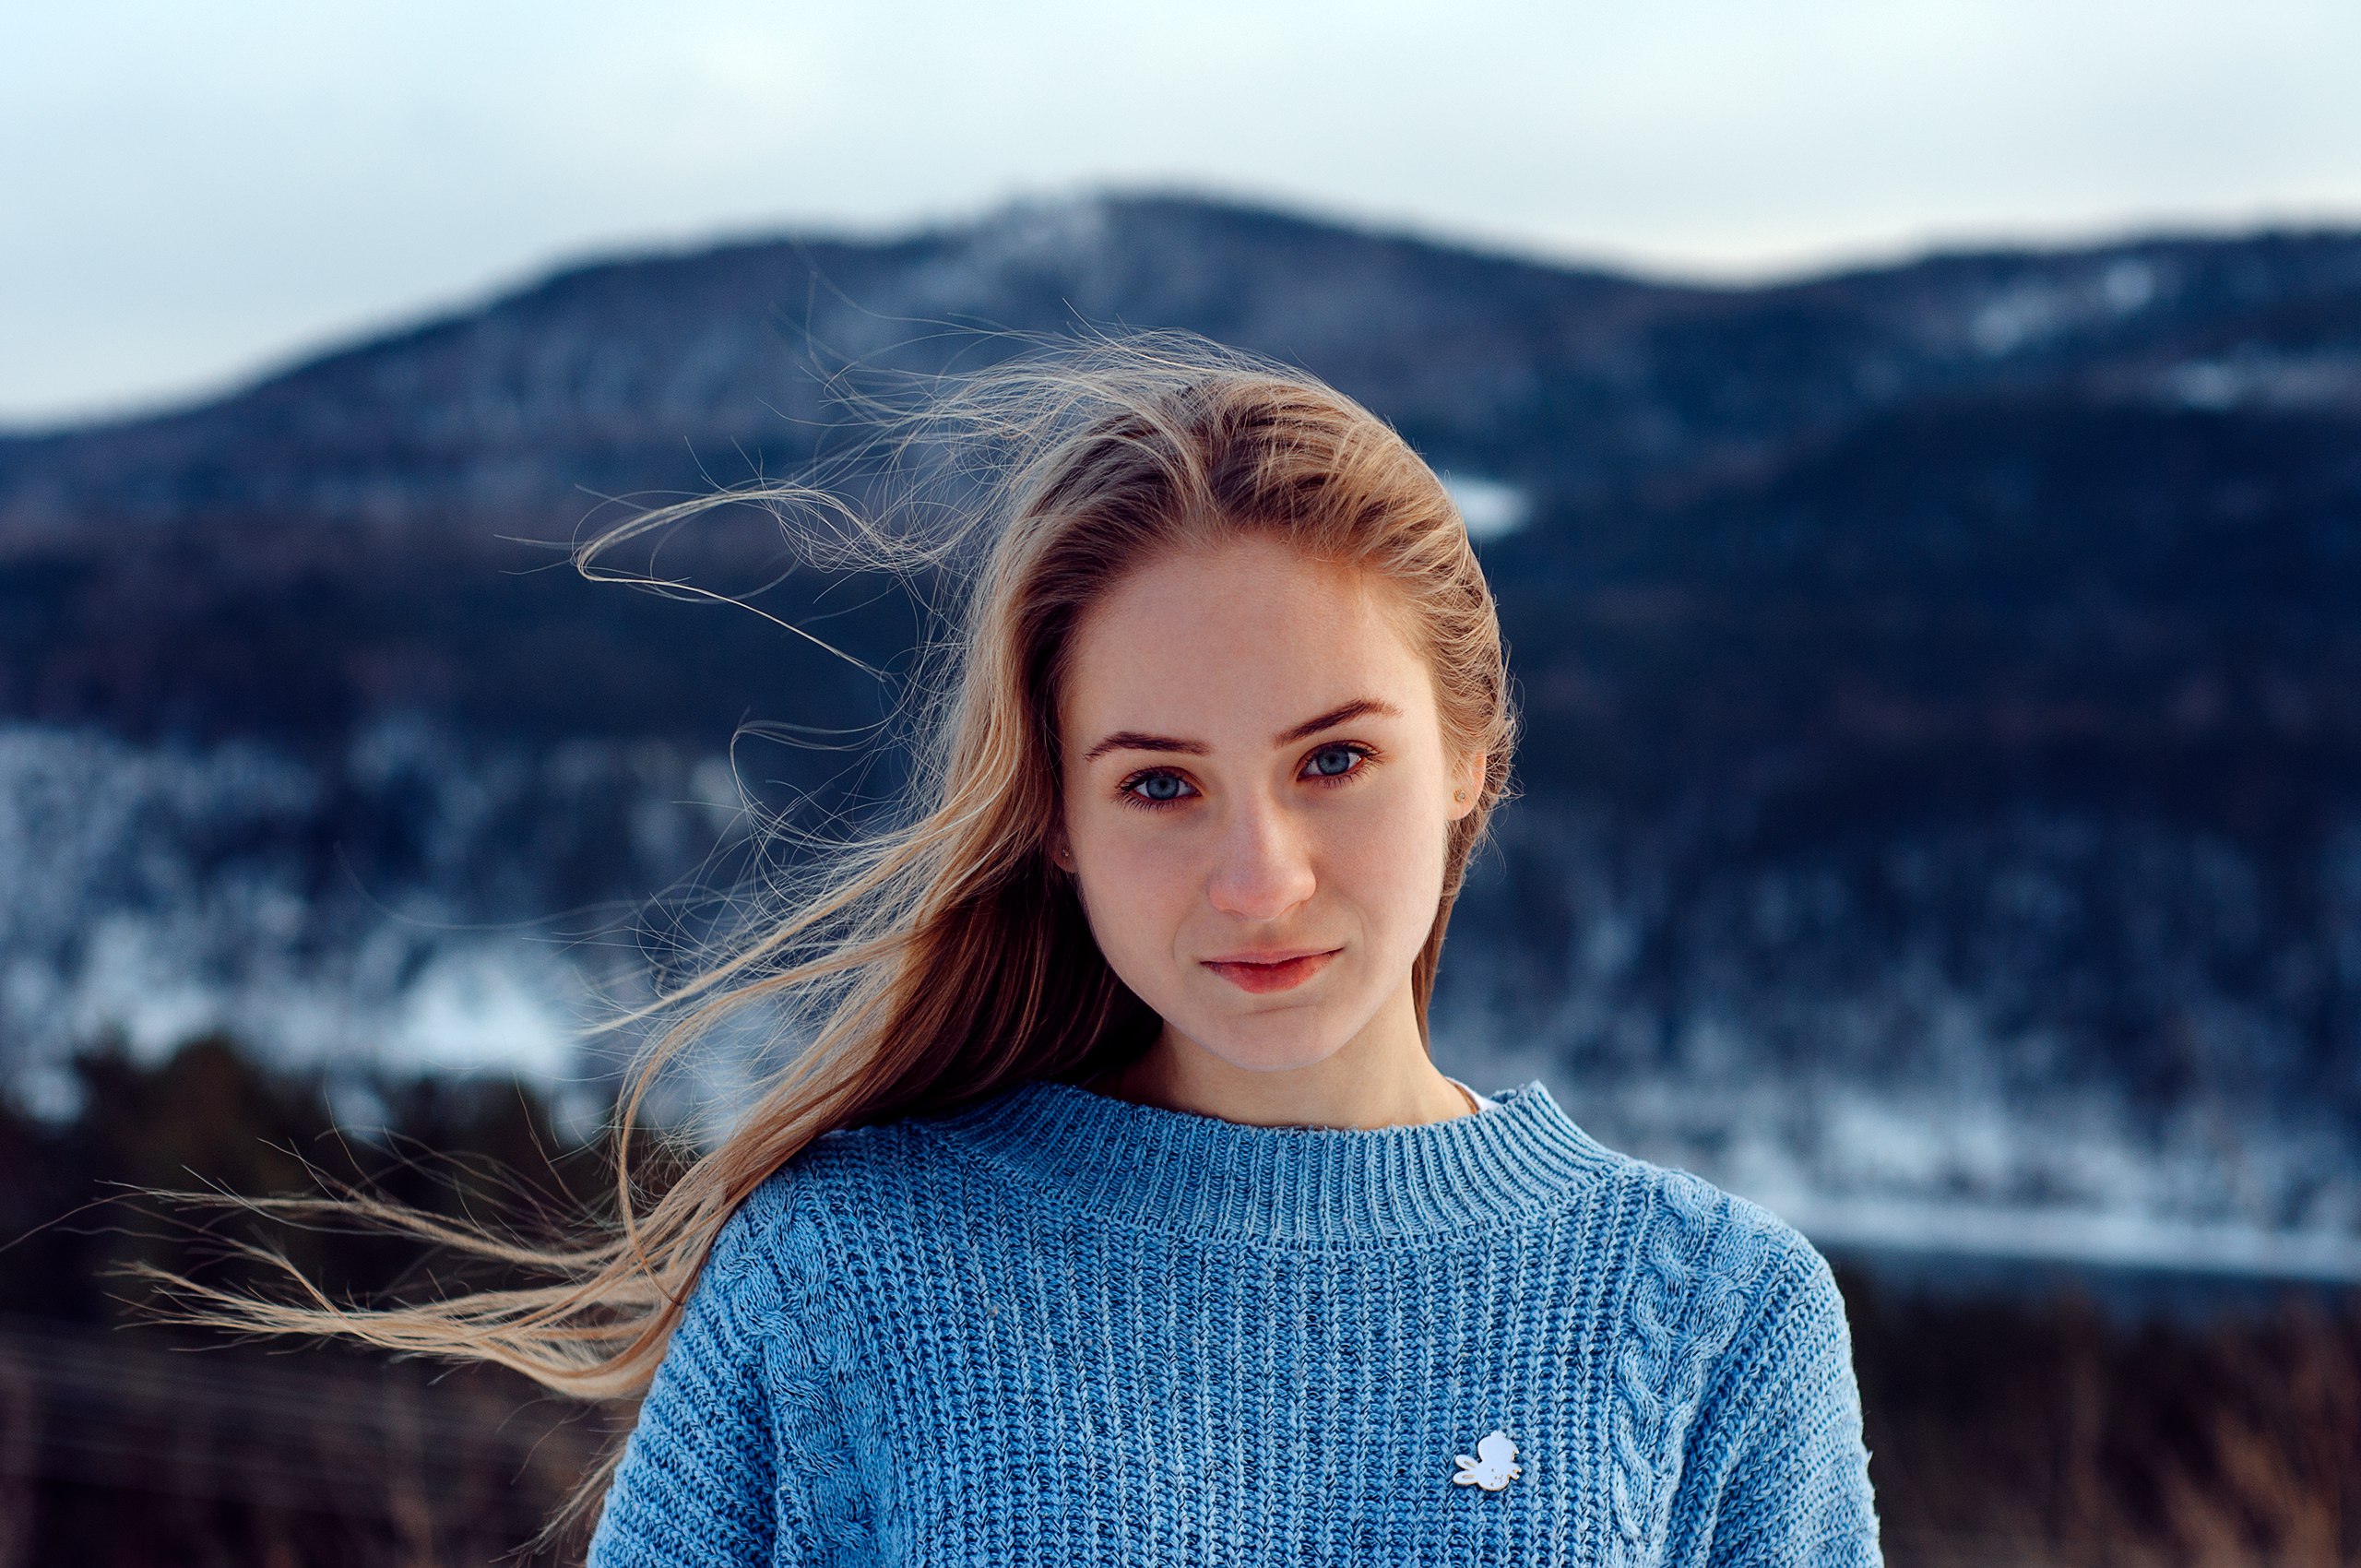 Women Blonde Model Looking At Viewer Sweater Mountains Snow Depth Of Field Women Outdoors Portrait W 2560x1700